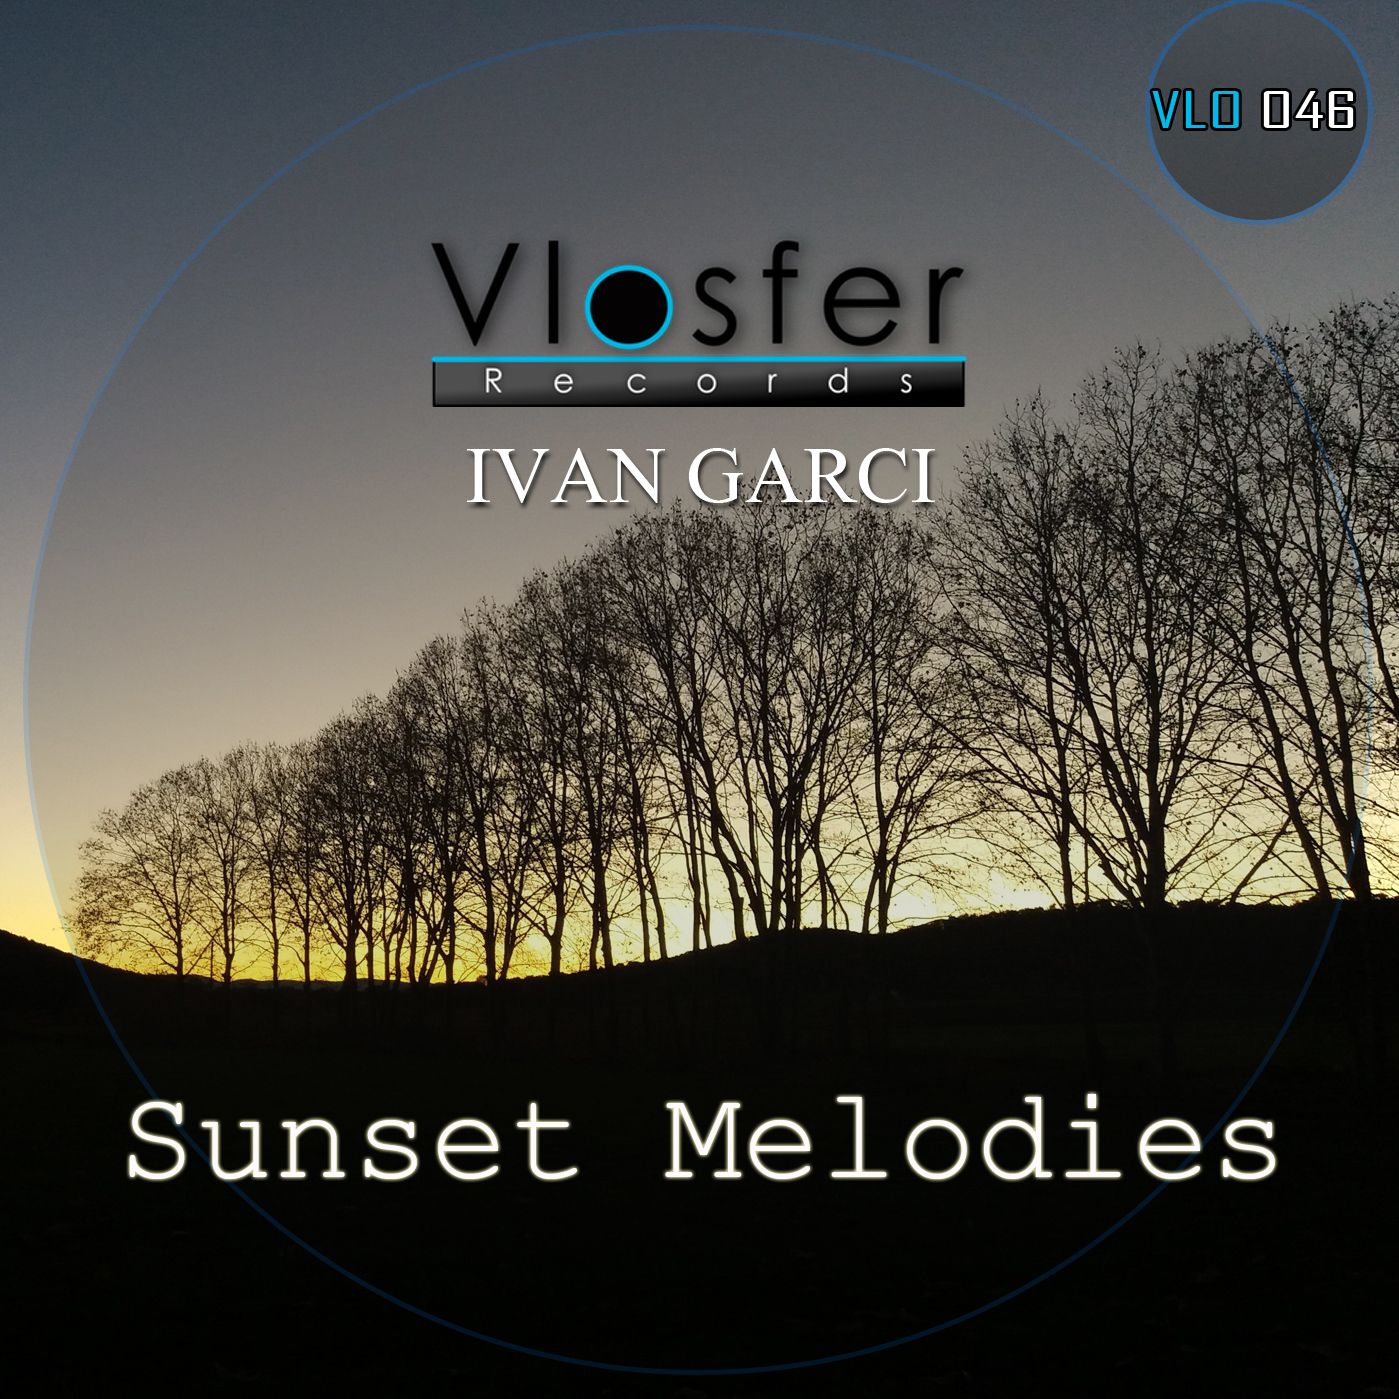 Elŝuti Clear - Ivan Garci (low quality sound) Vlosfer records.